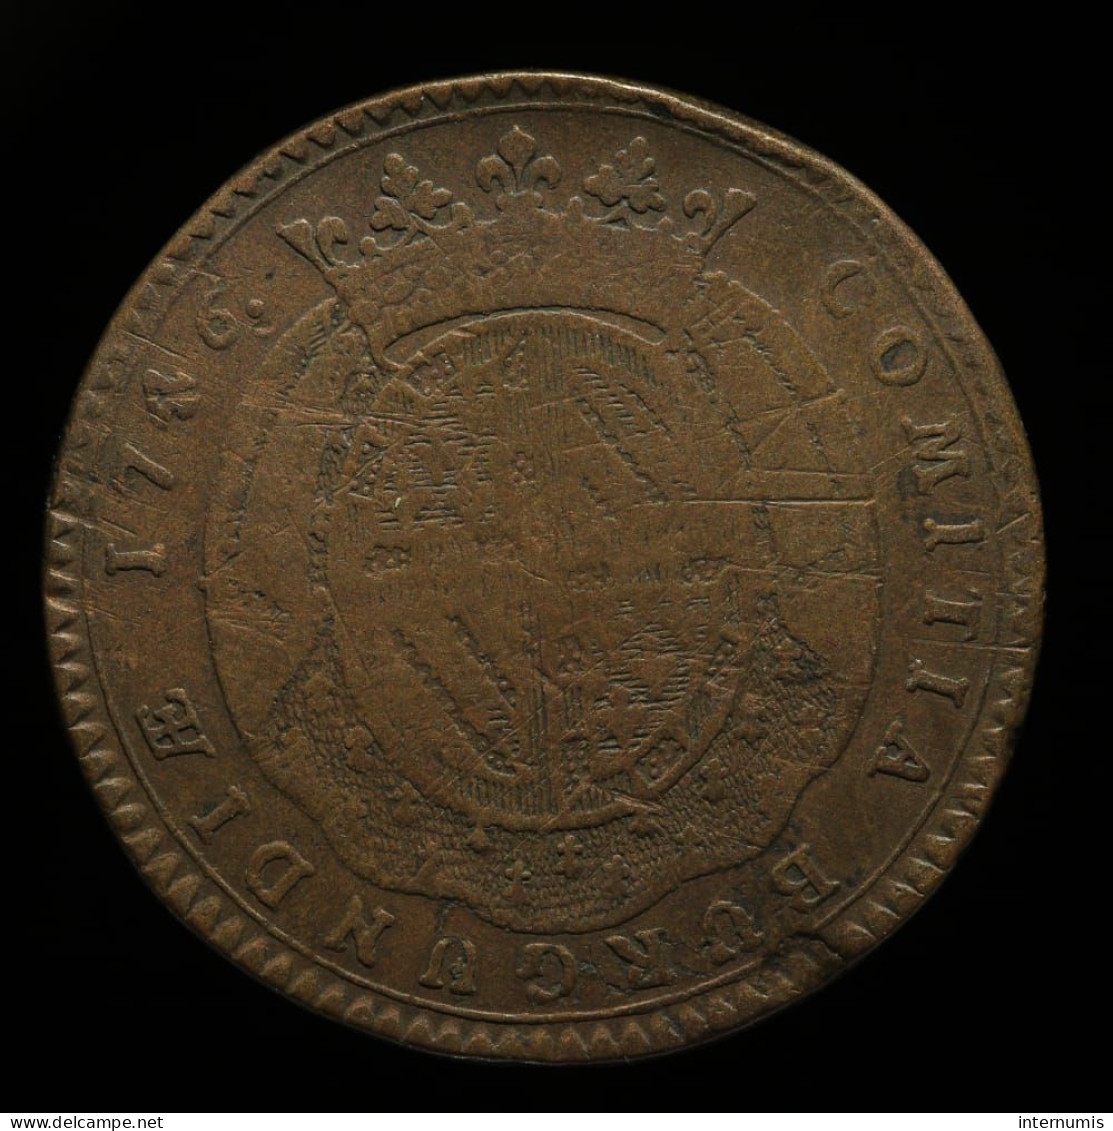 France, Louis XV, COMITIA BURGUNDIAE (Etats De Bourgogne), 1746, Cuivre (Copper), TB+ (VF), Feu#9849 - Royaux / De Noblesse